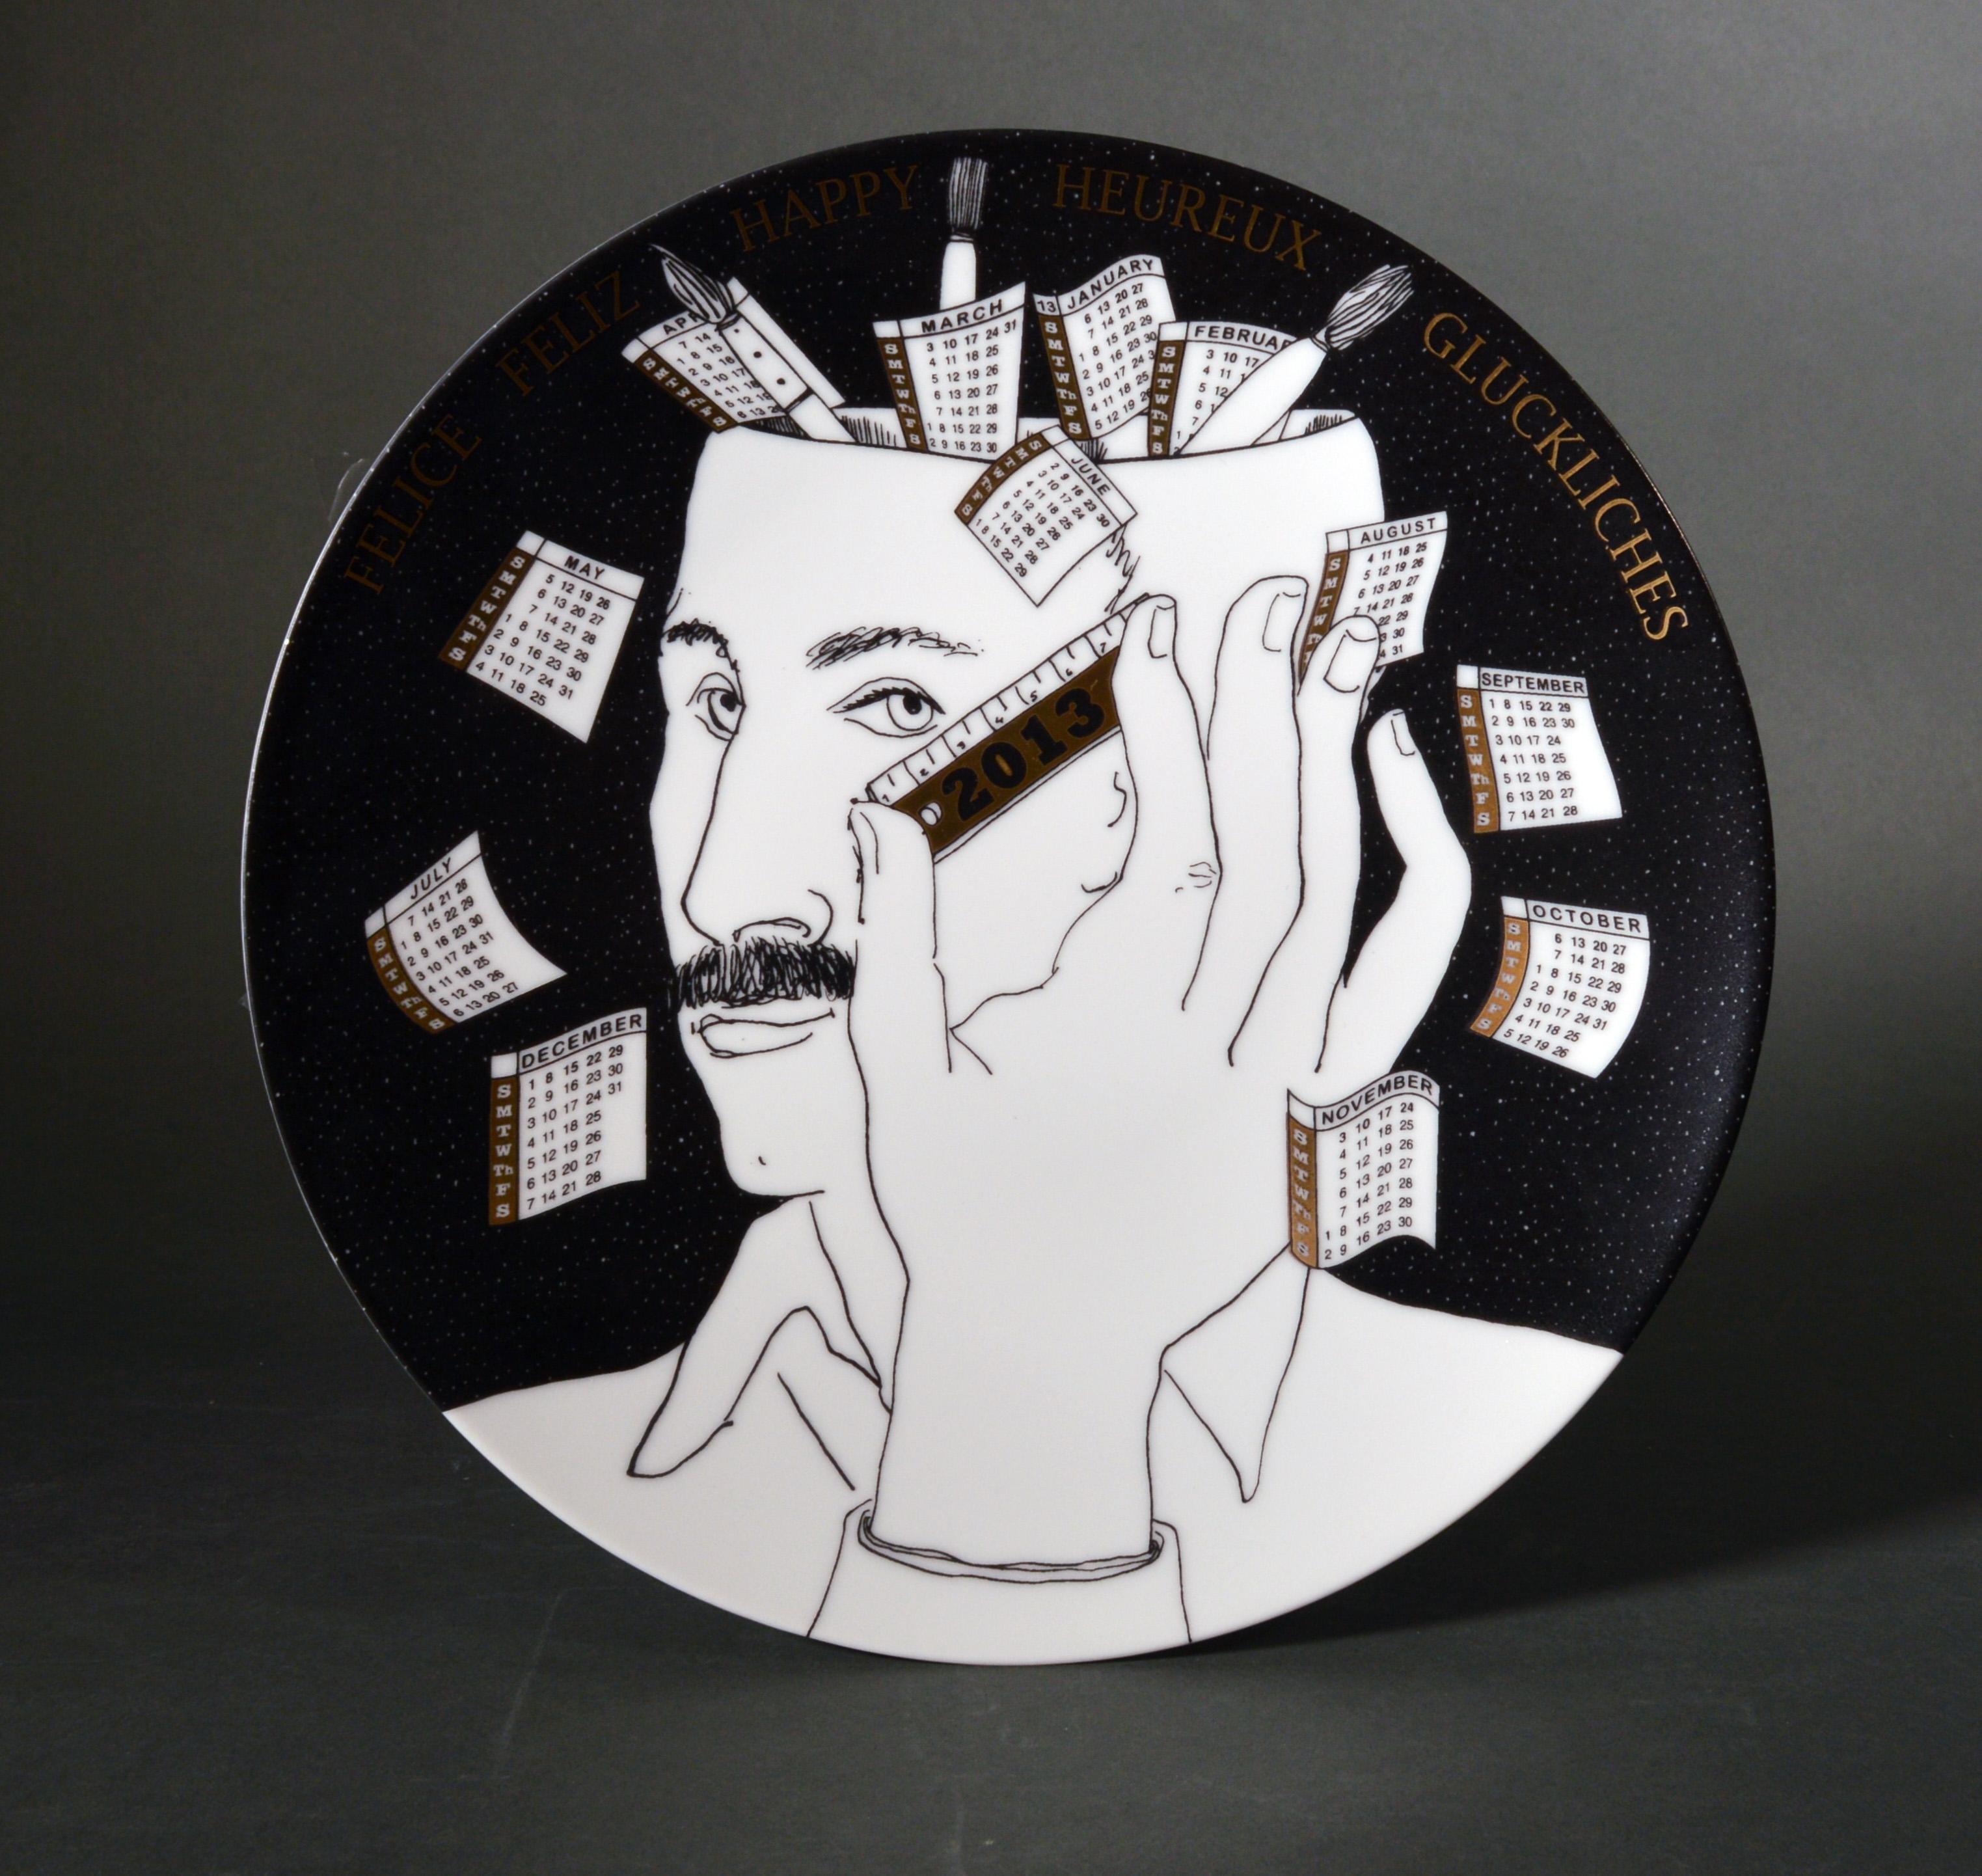 Modern Fornasetti Porcelain Calendar Plate 2013, Self Portrait, Number 398 of 700 Made